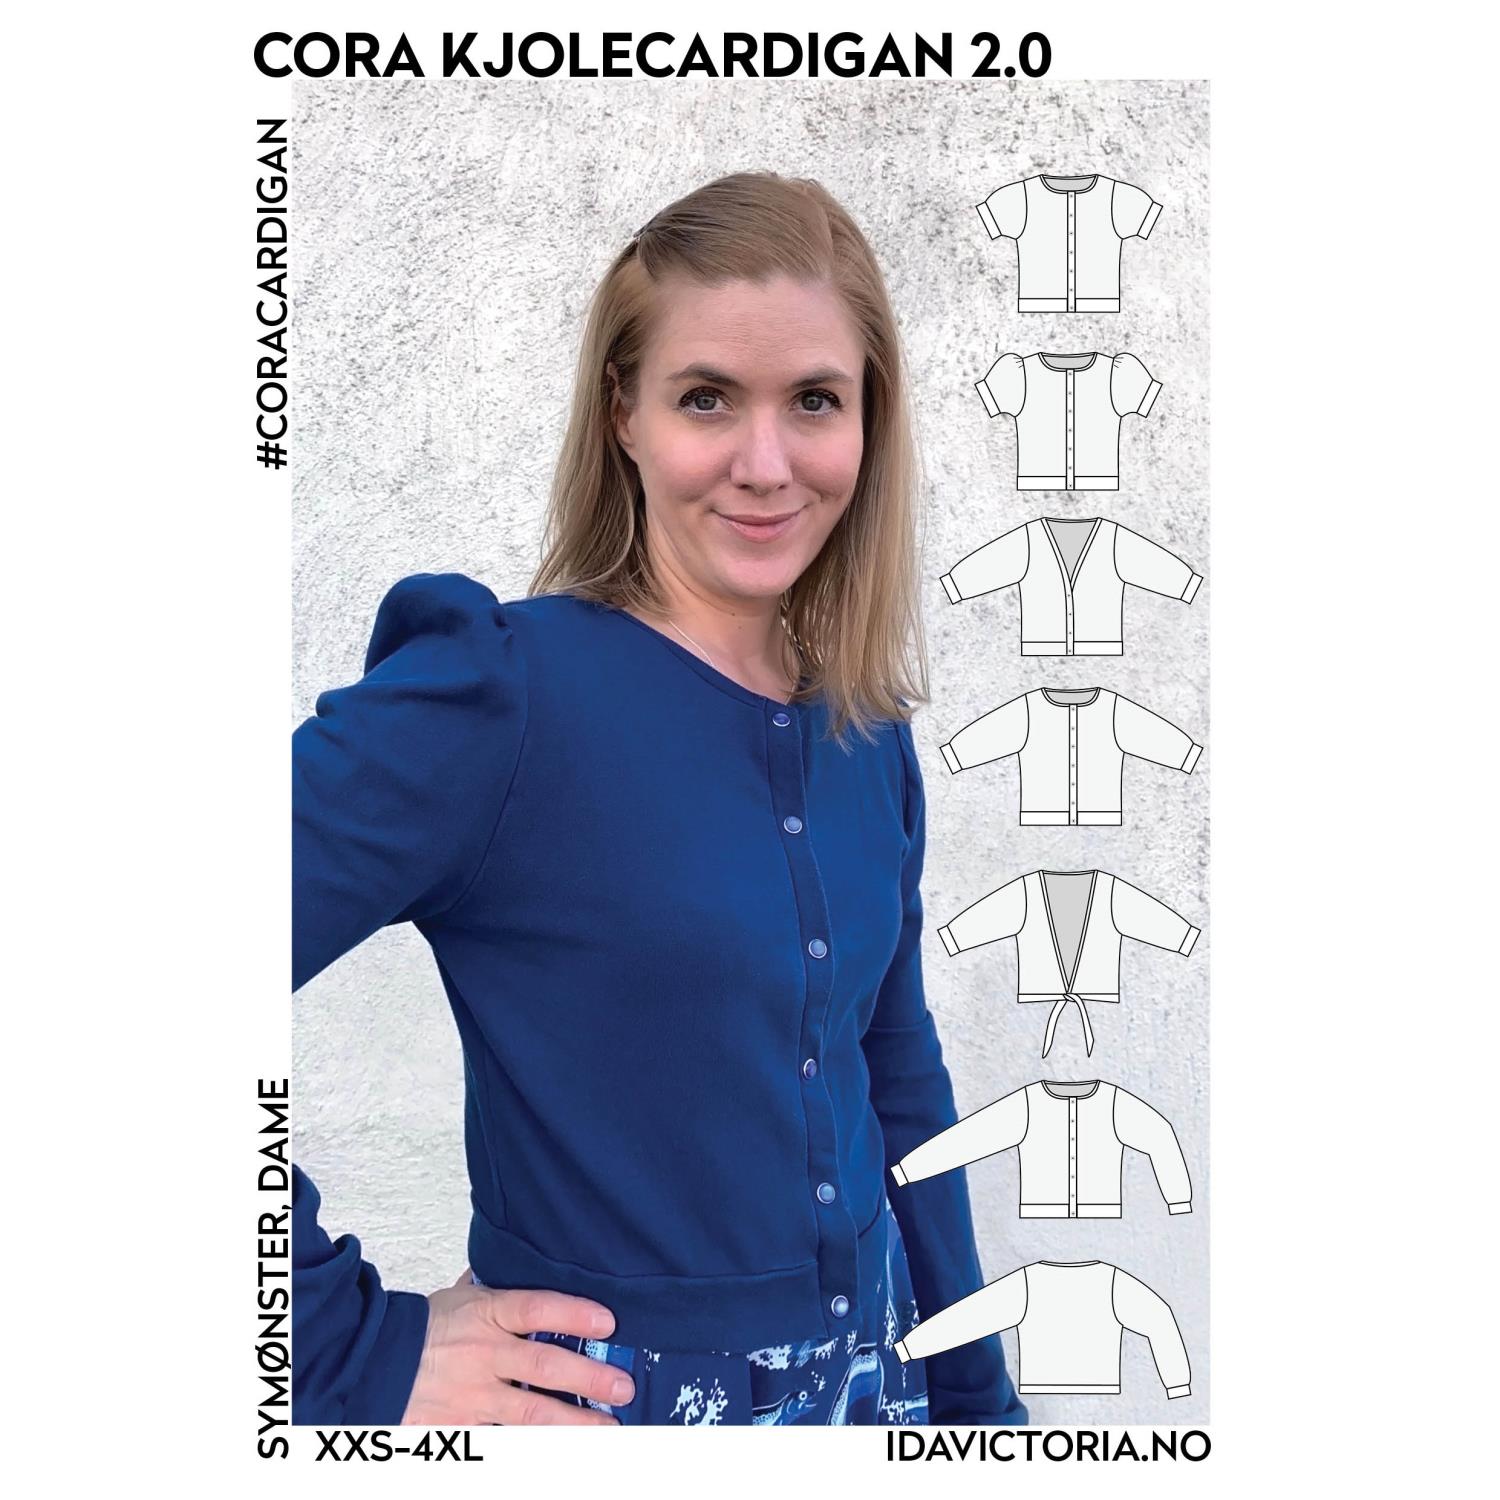 Ida Victoria - Cora Kjolecardigan